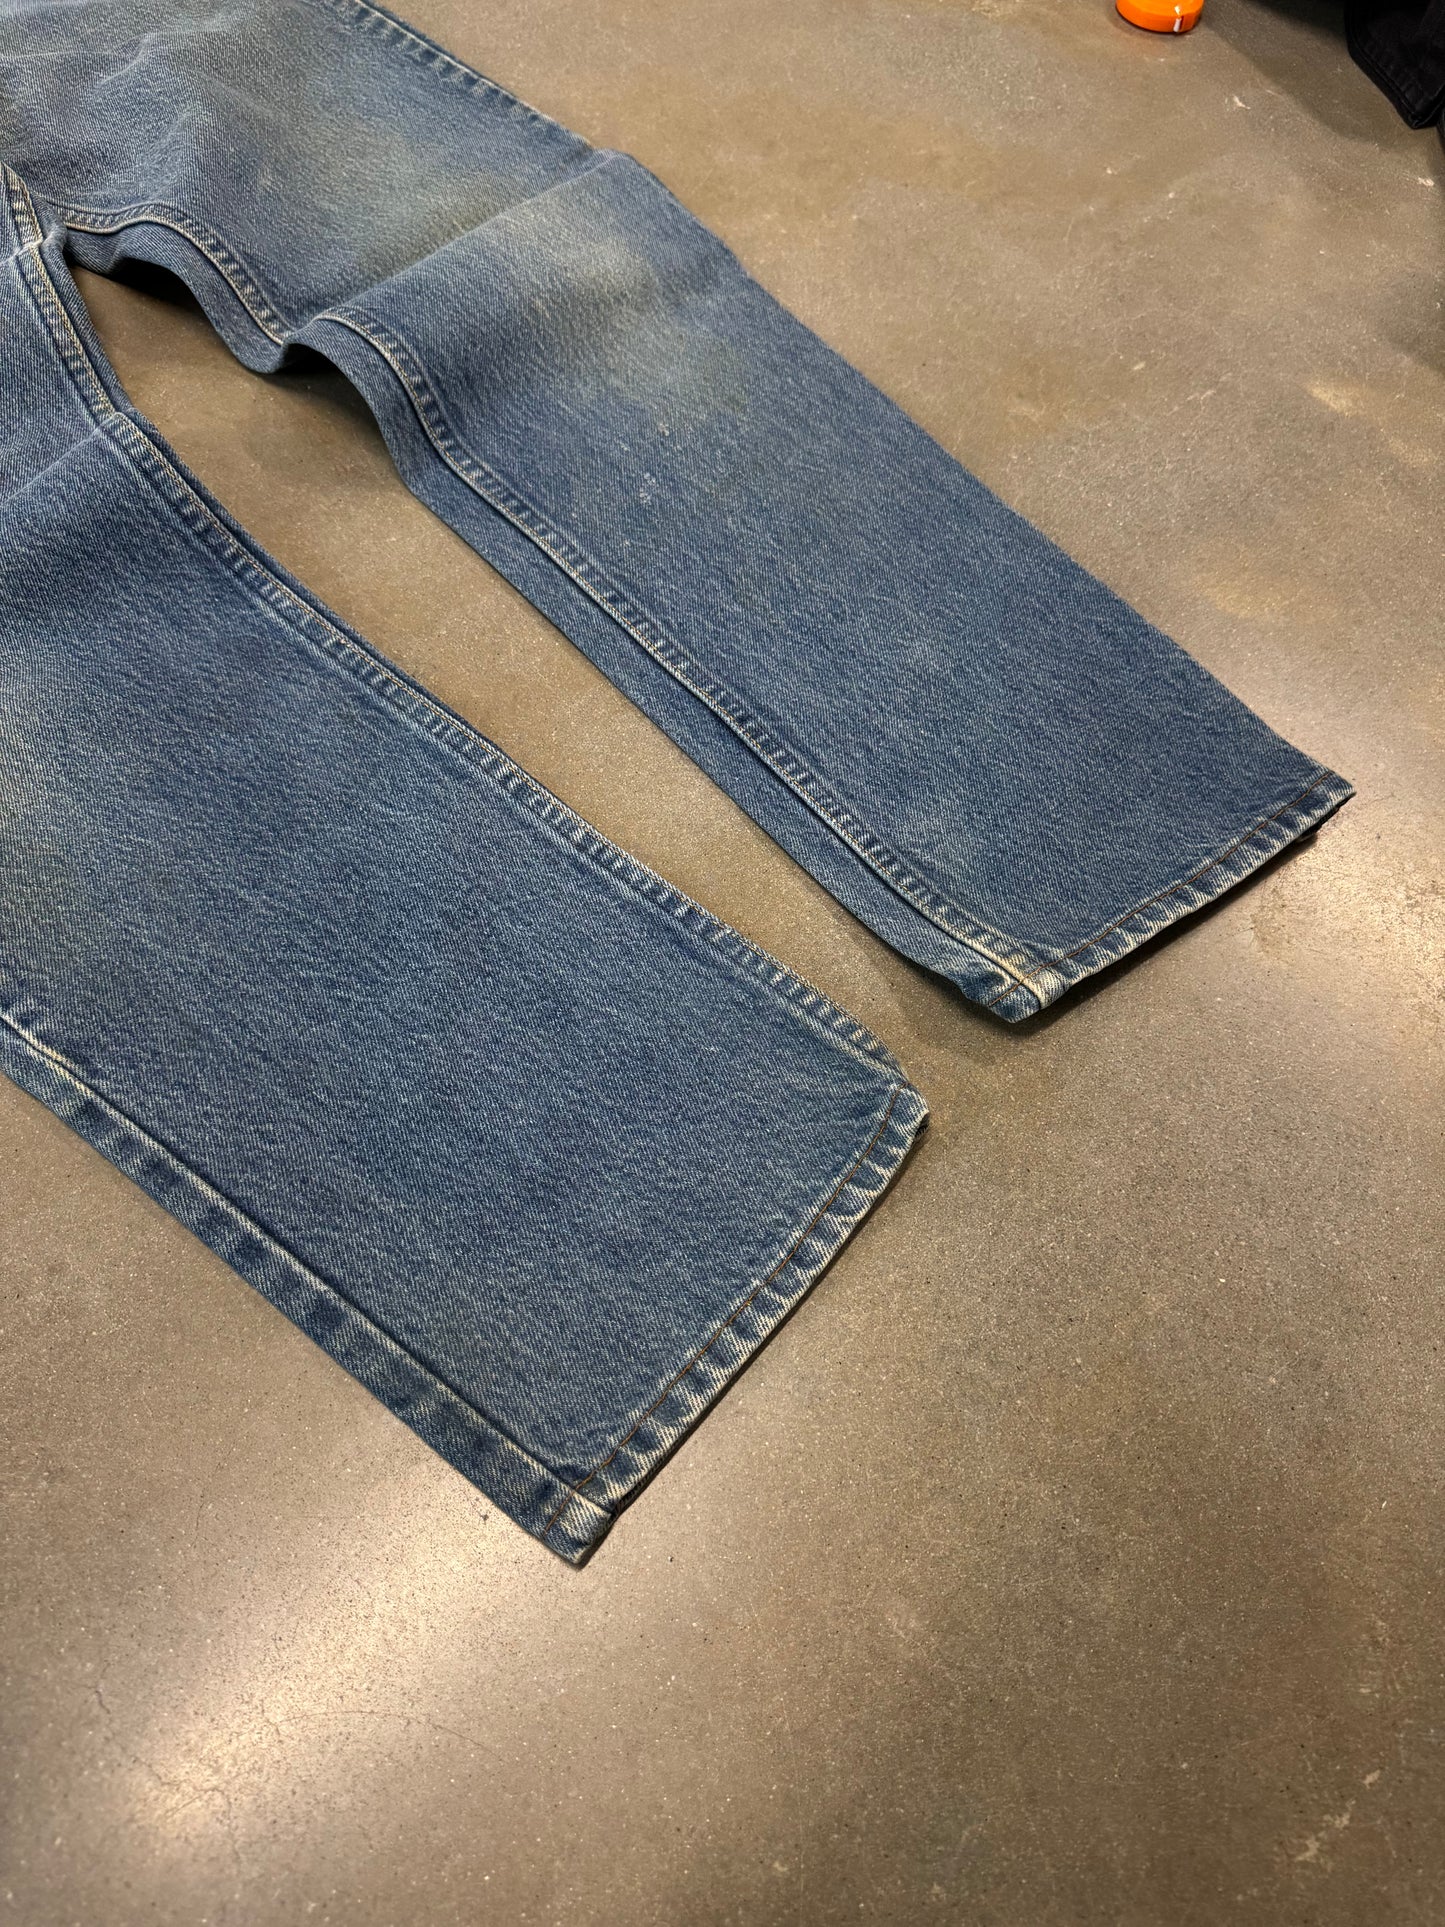 Vintage 1990s Levis 20505-0219 Orange Tab Jeans [32]